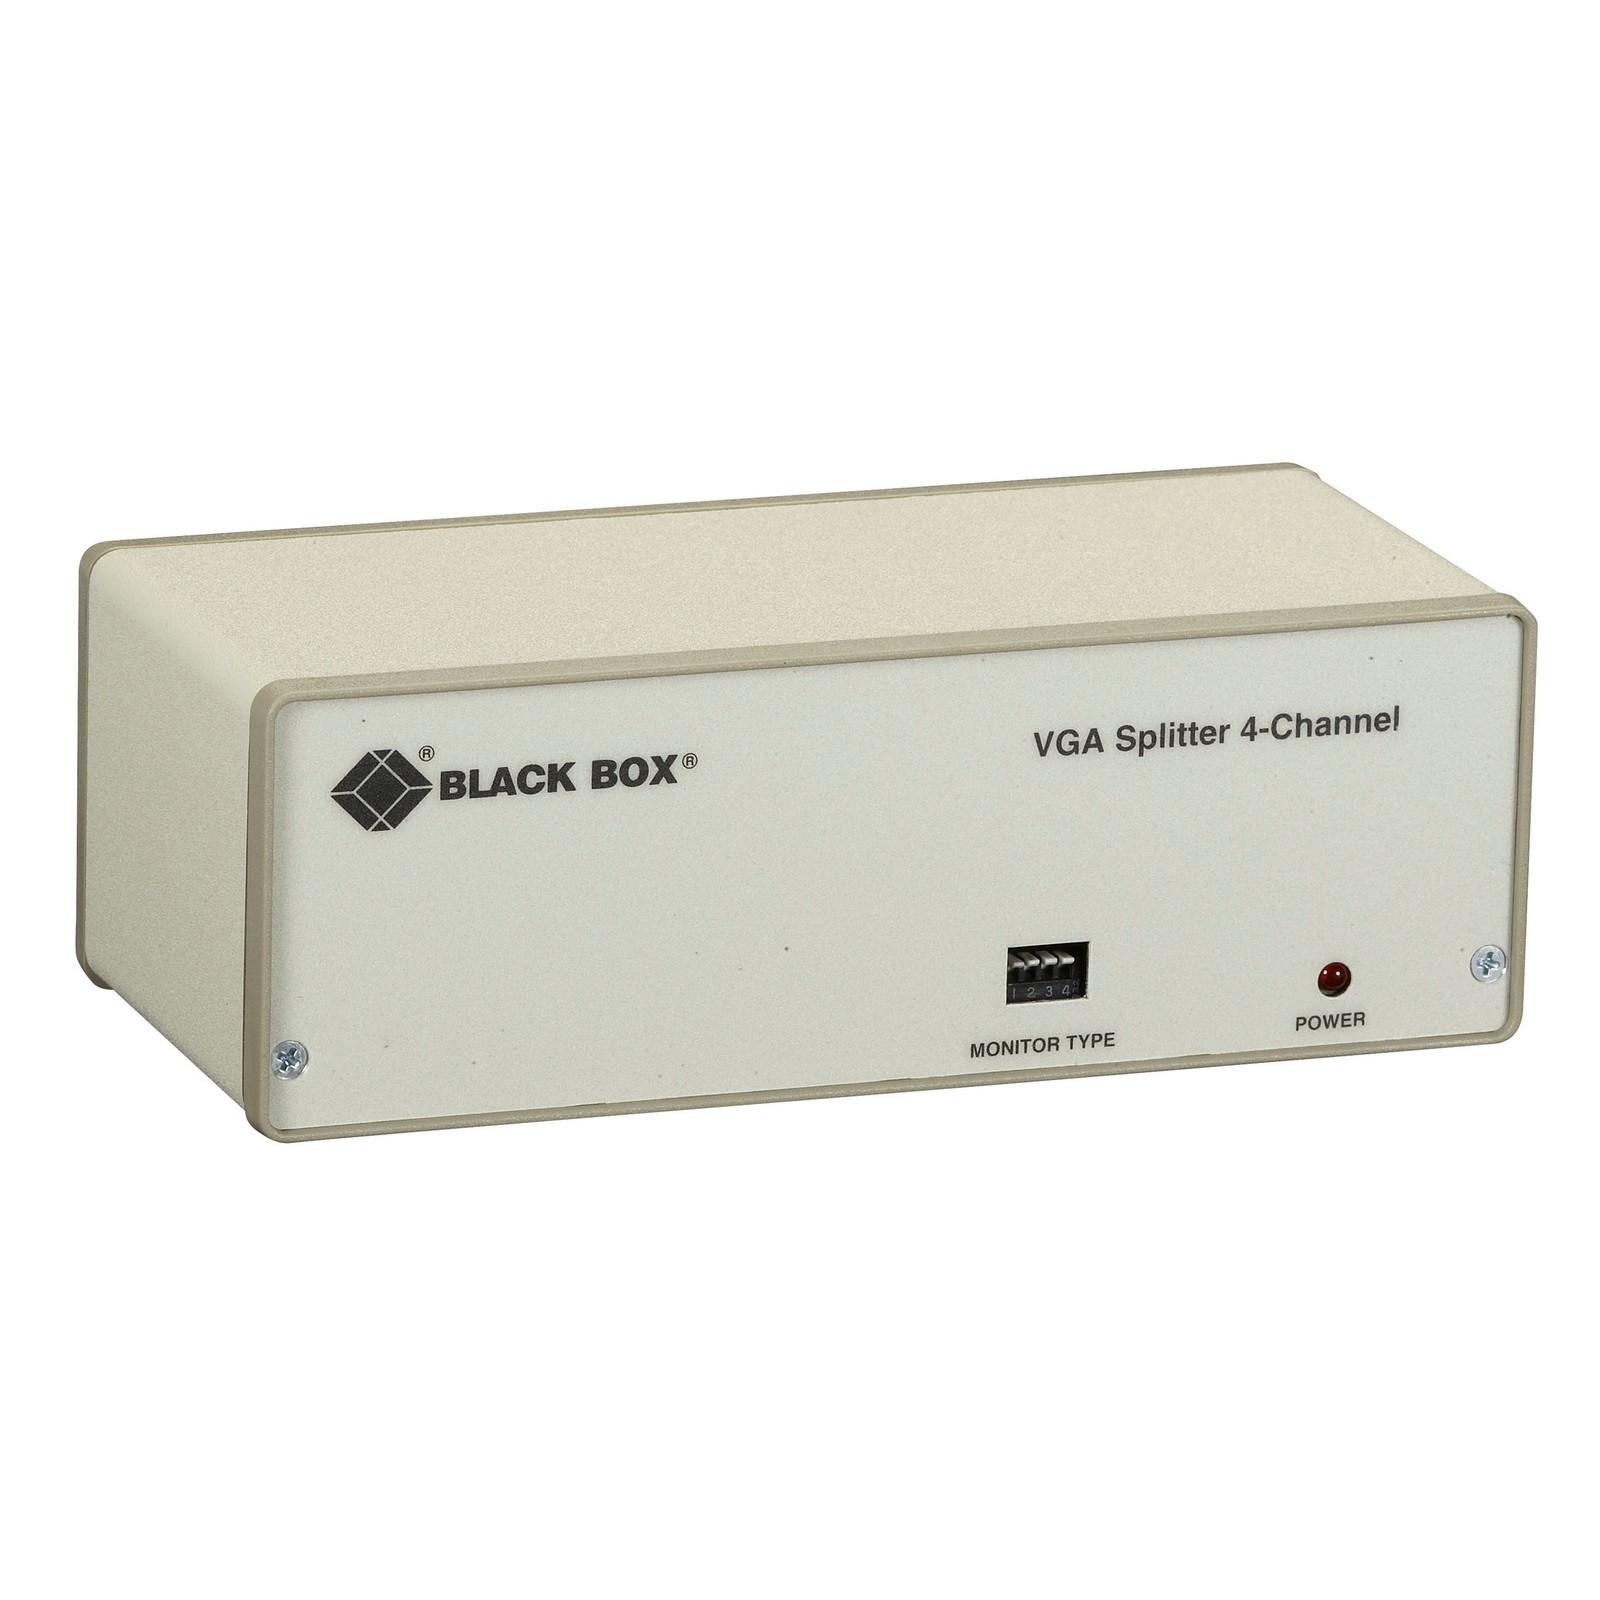 VGA Video Splitter - 4-Channel, 230-VAC